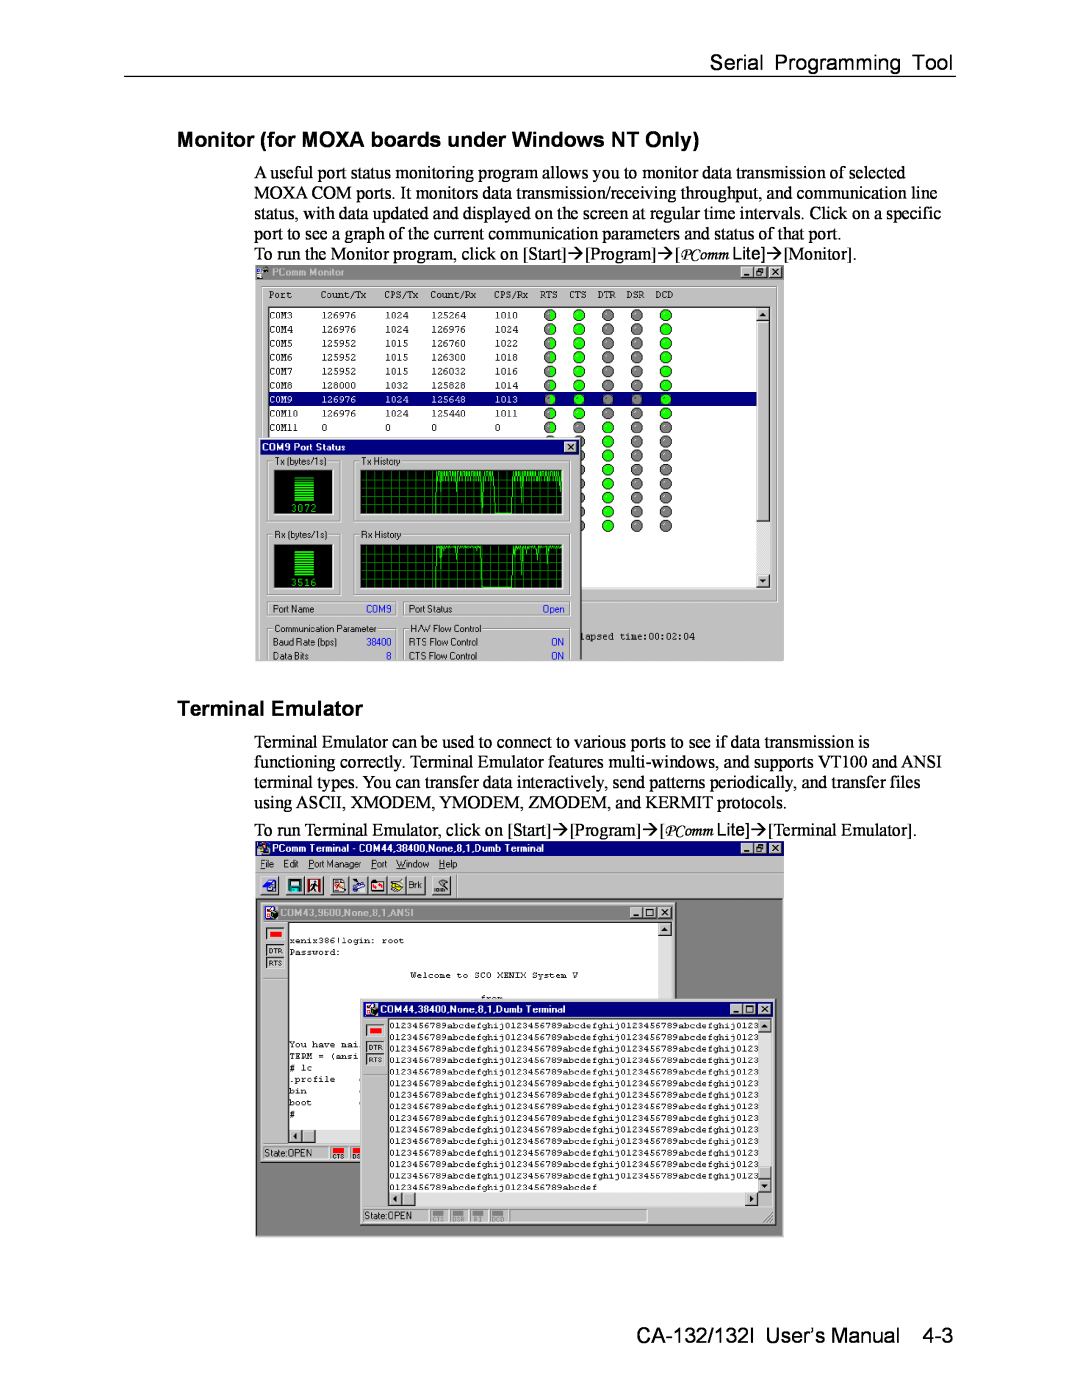 Moxa Technologies CA-132/132I Serial Programming Tool, Monitor for MOXA boards under Windows NT Only, Terminal Emulator 